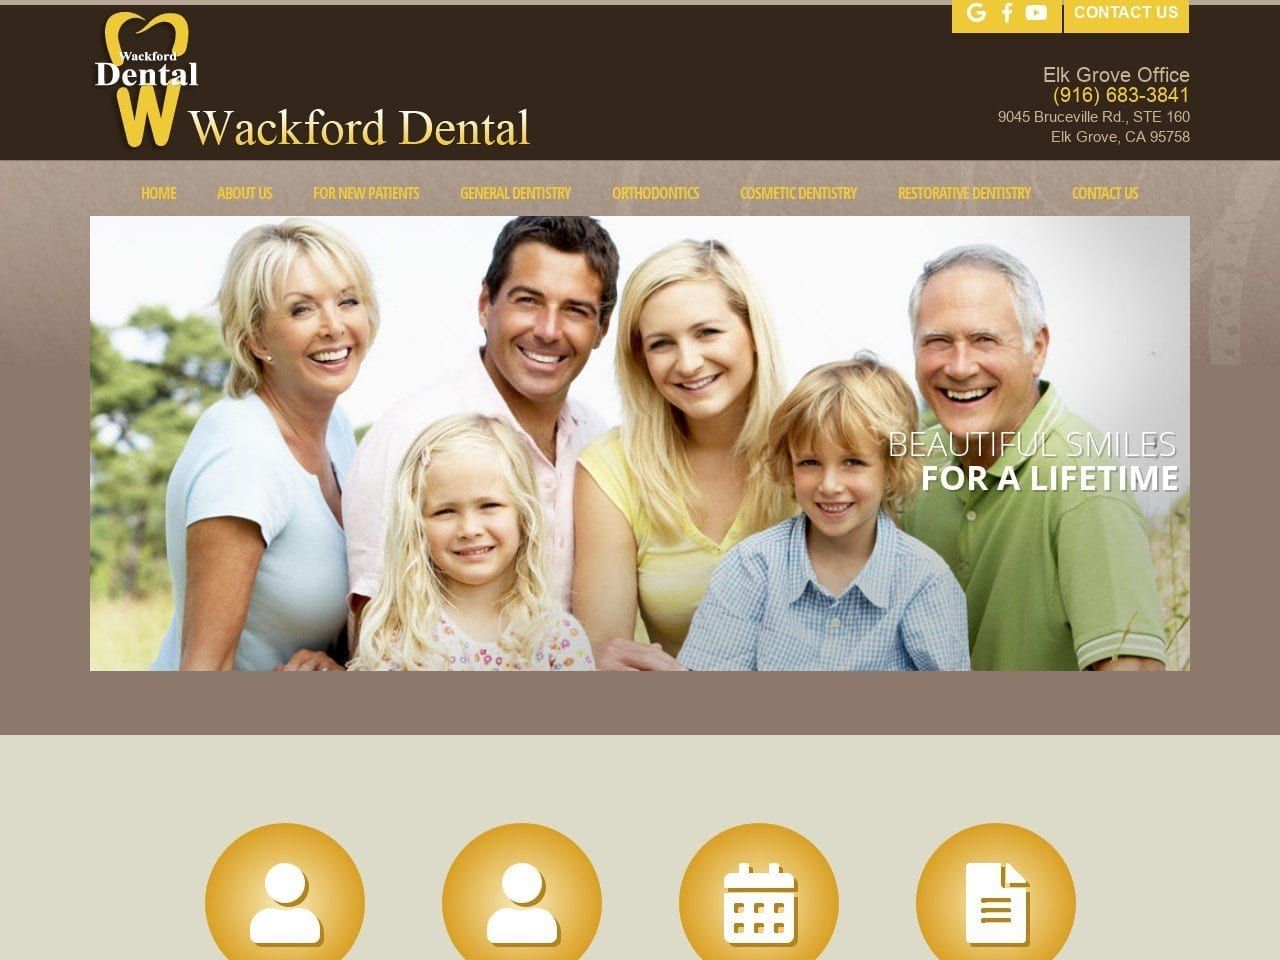 Wackford Dental Website Screenshot from wackforddental.com